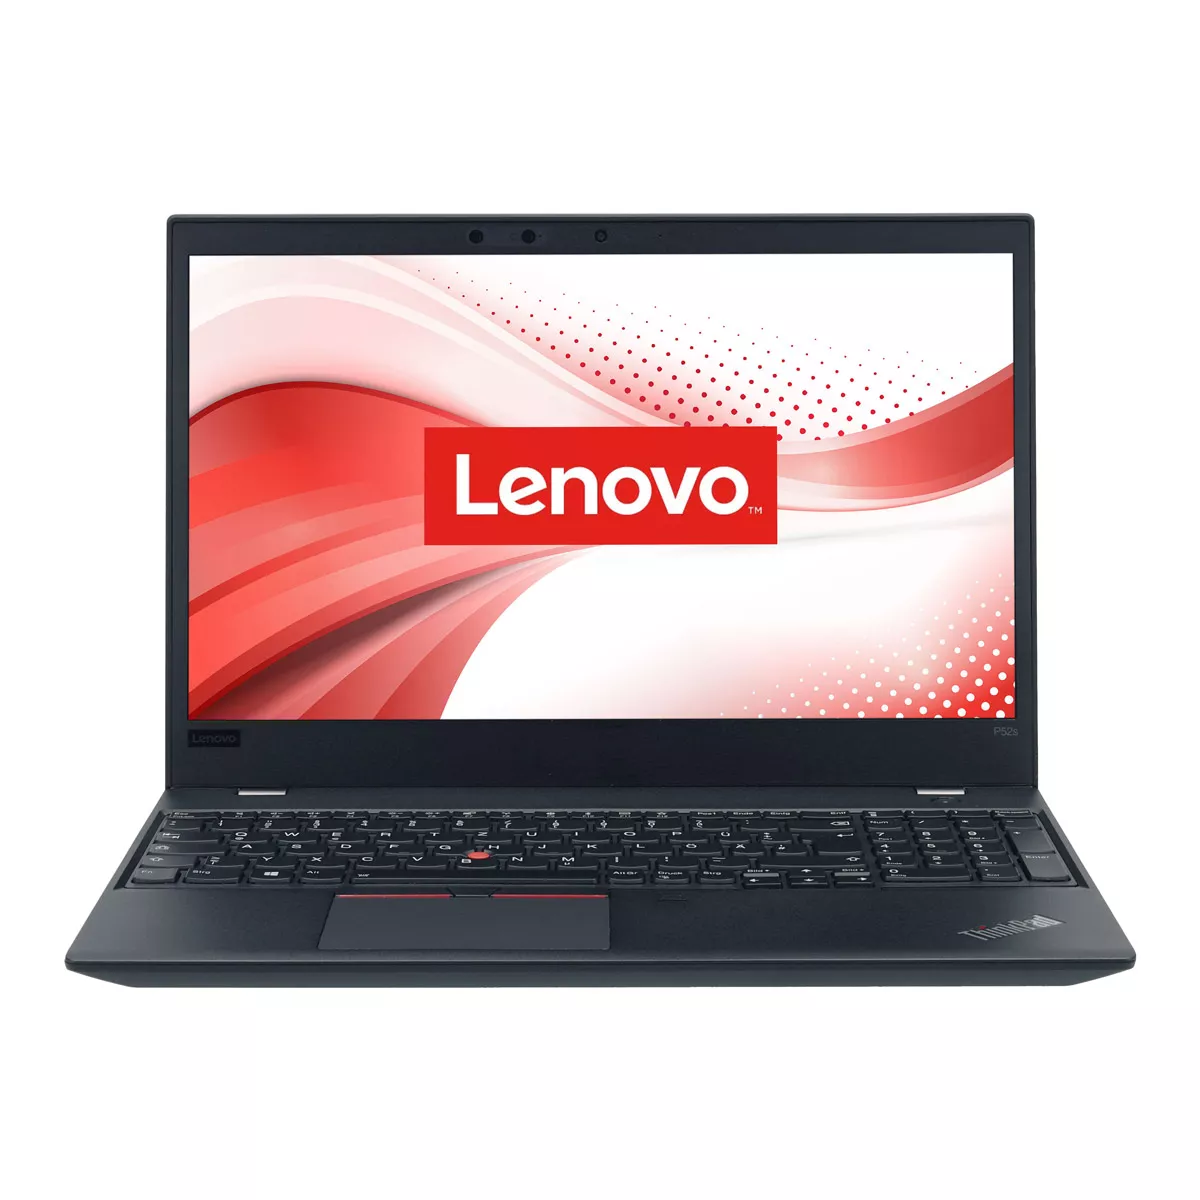 Lenovo ThinkPad P52s Core i7 8650U nVidia Quadro P500 32 GB 500 GB M.2 nVME SSD Webcam A